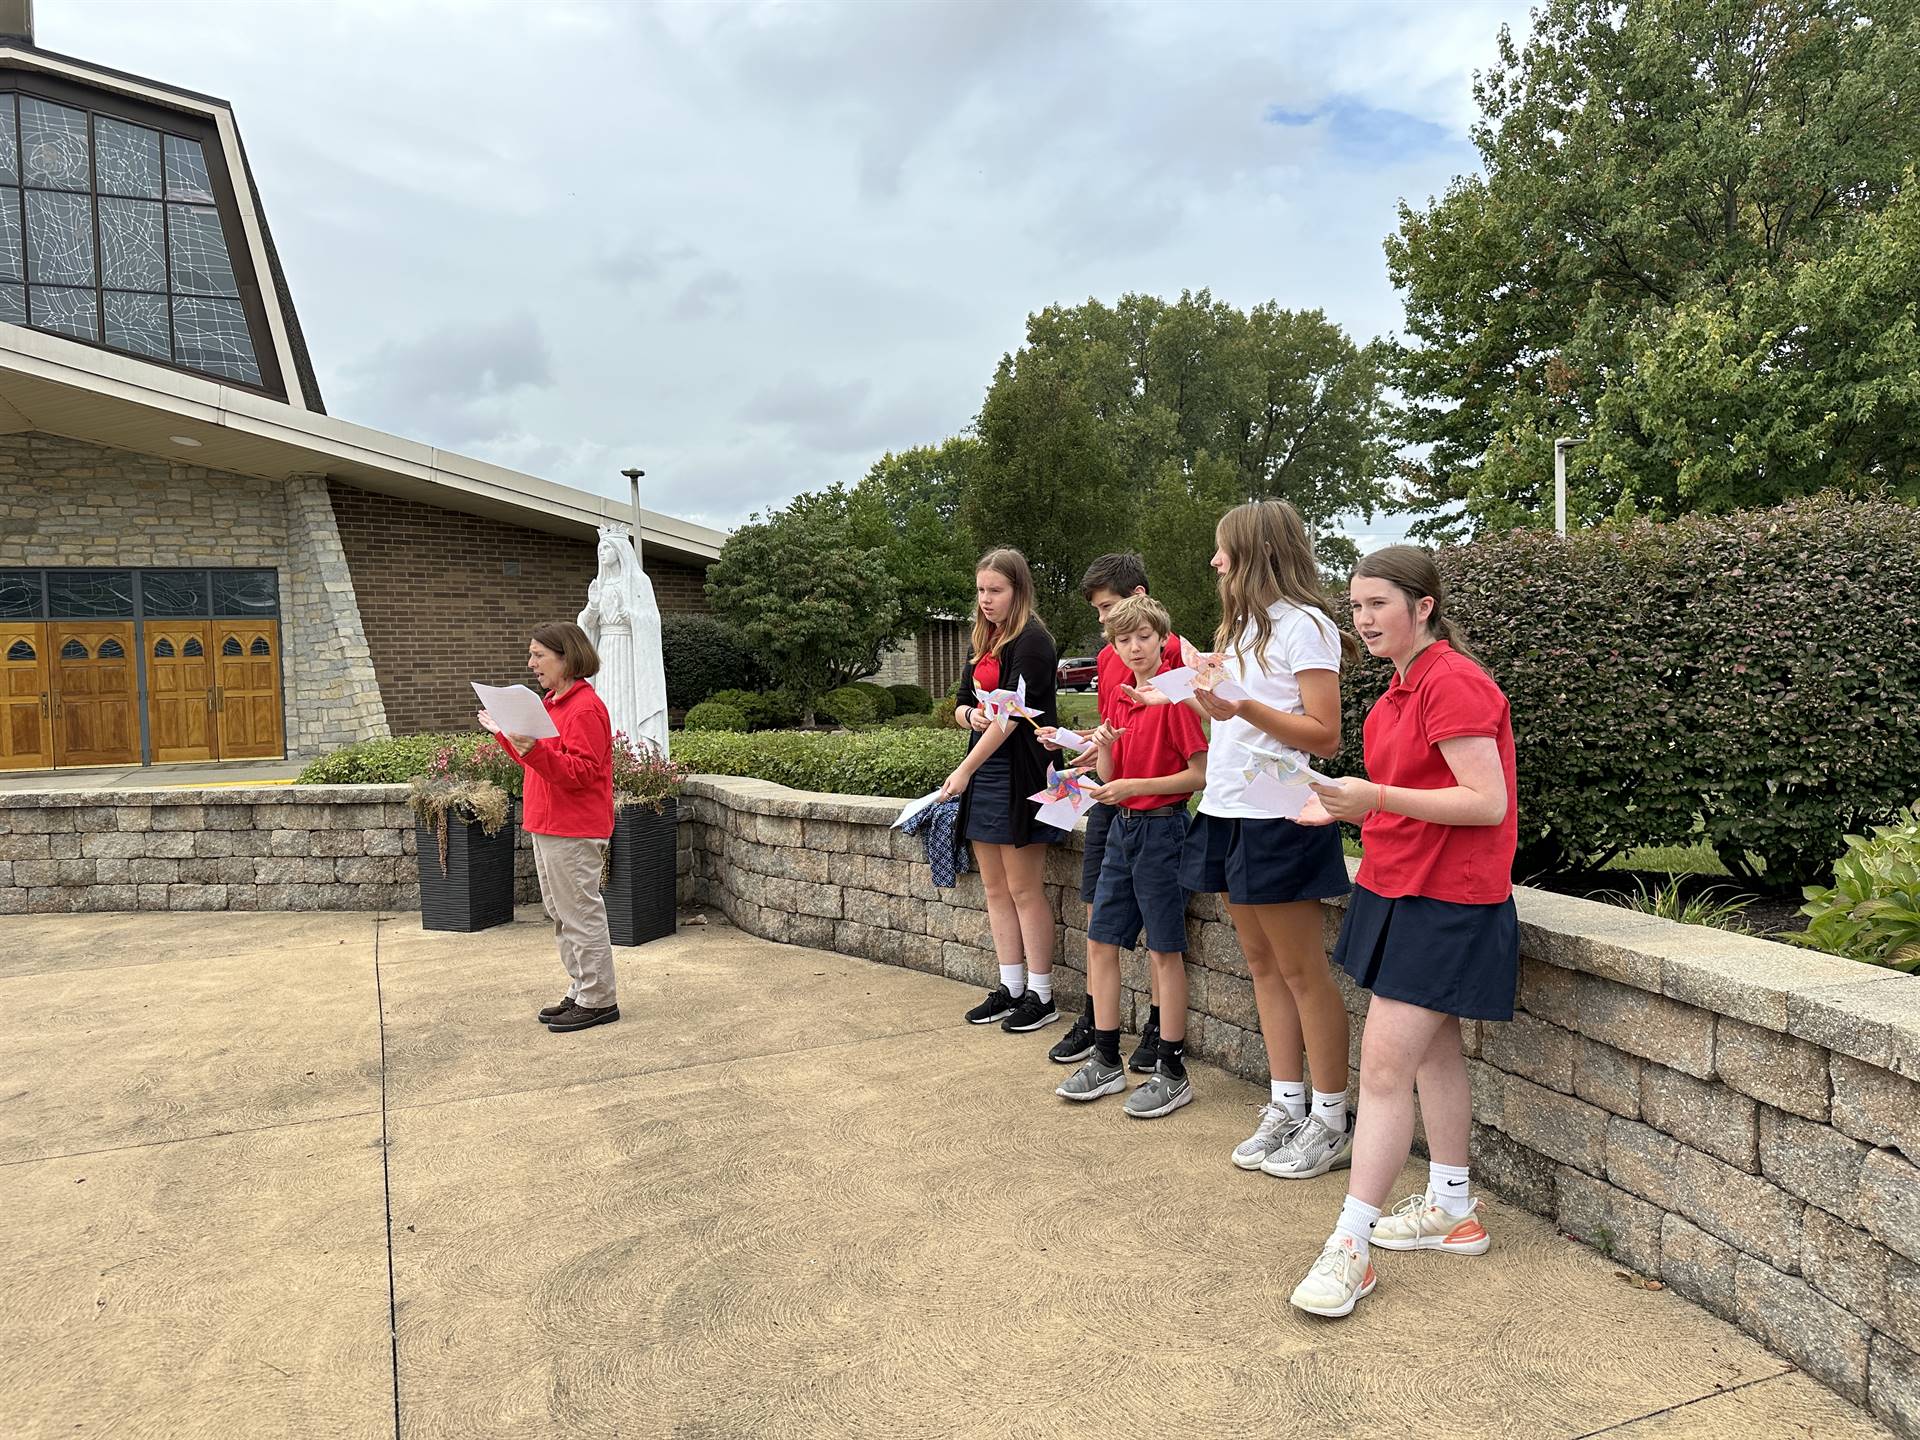 8th graders lead prayer service